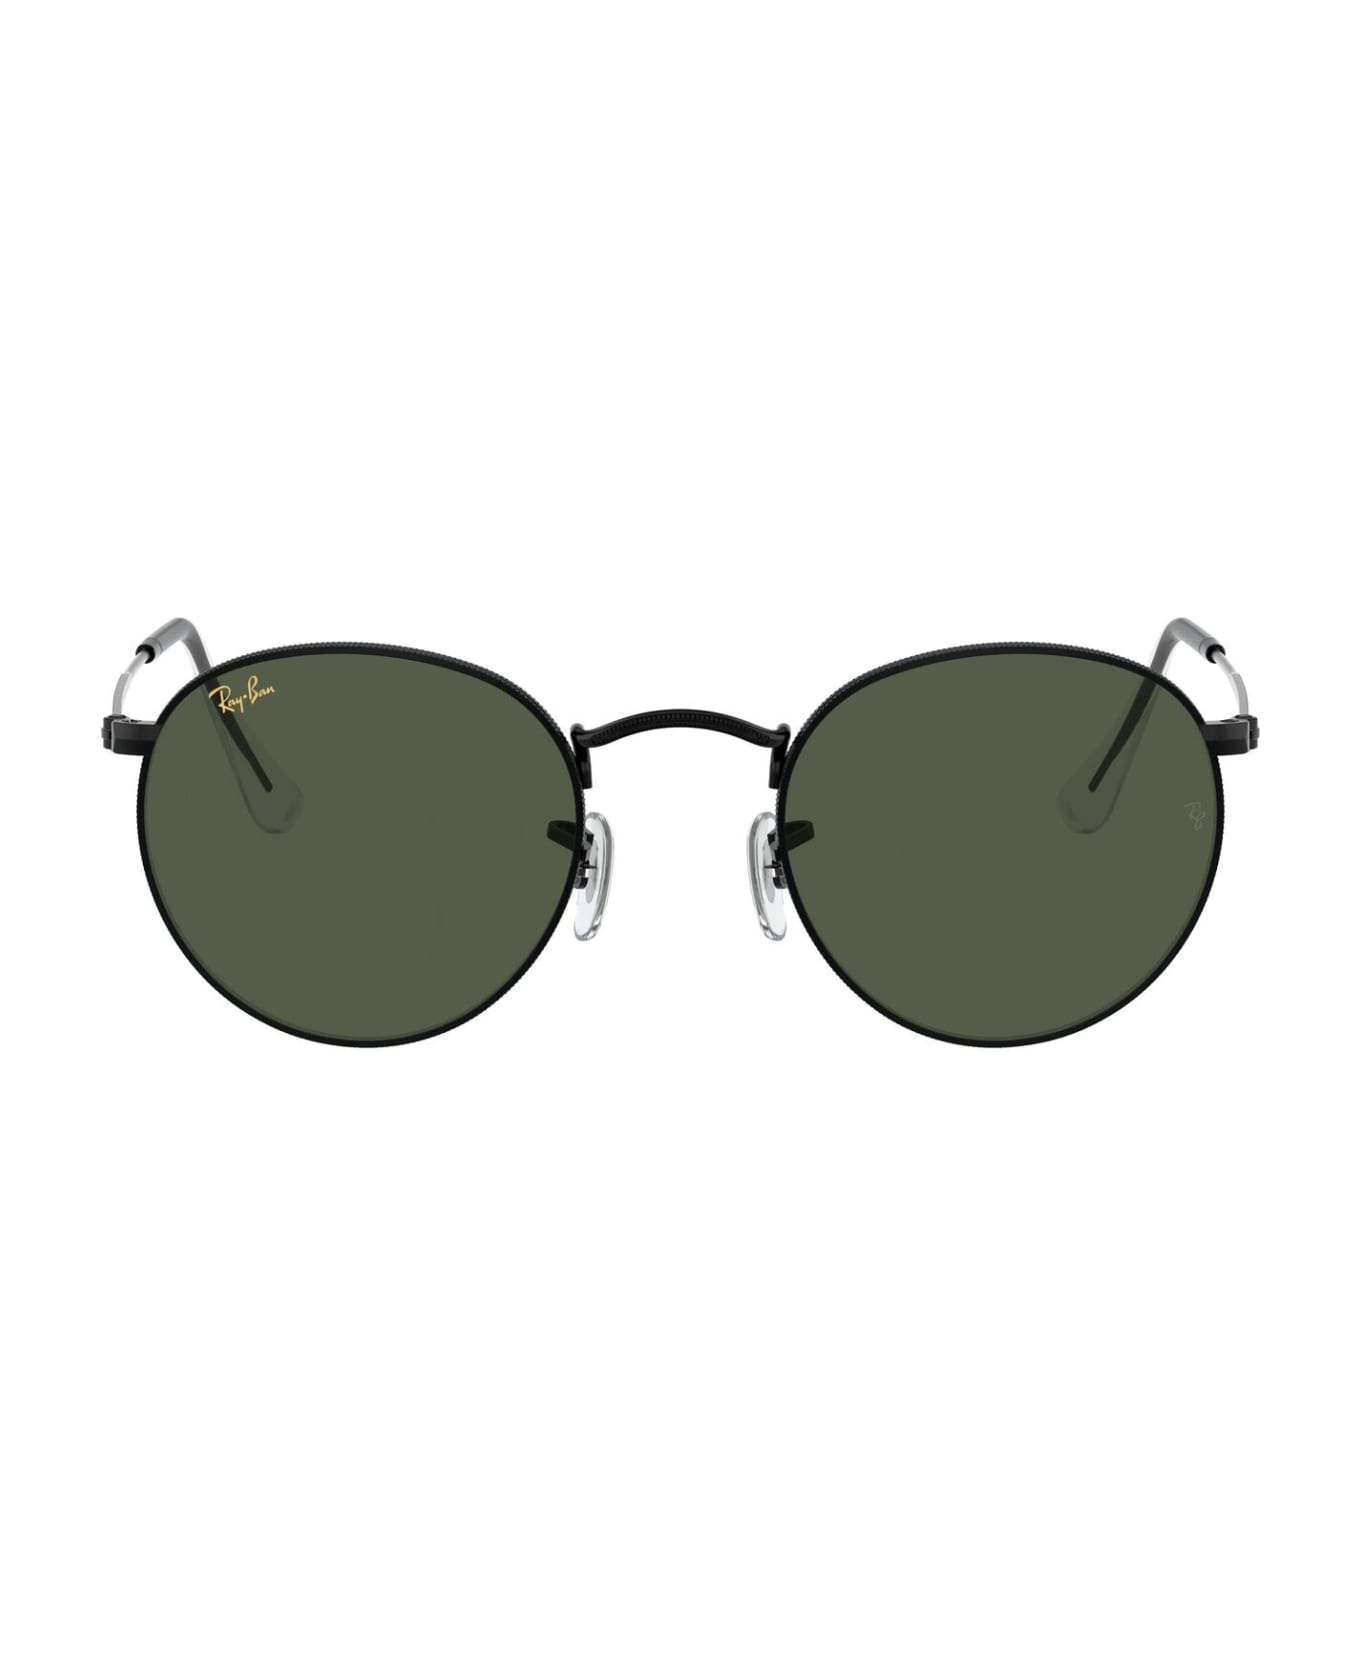 Ray-Ban Sunglasses - Nero/Verde サングラス